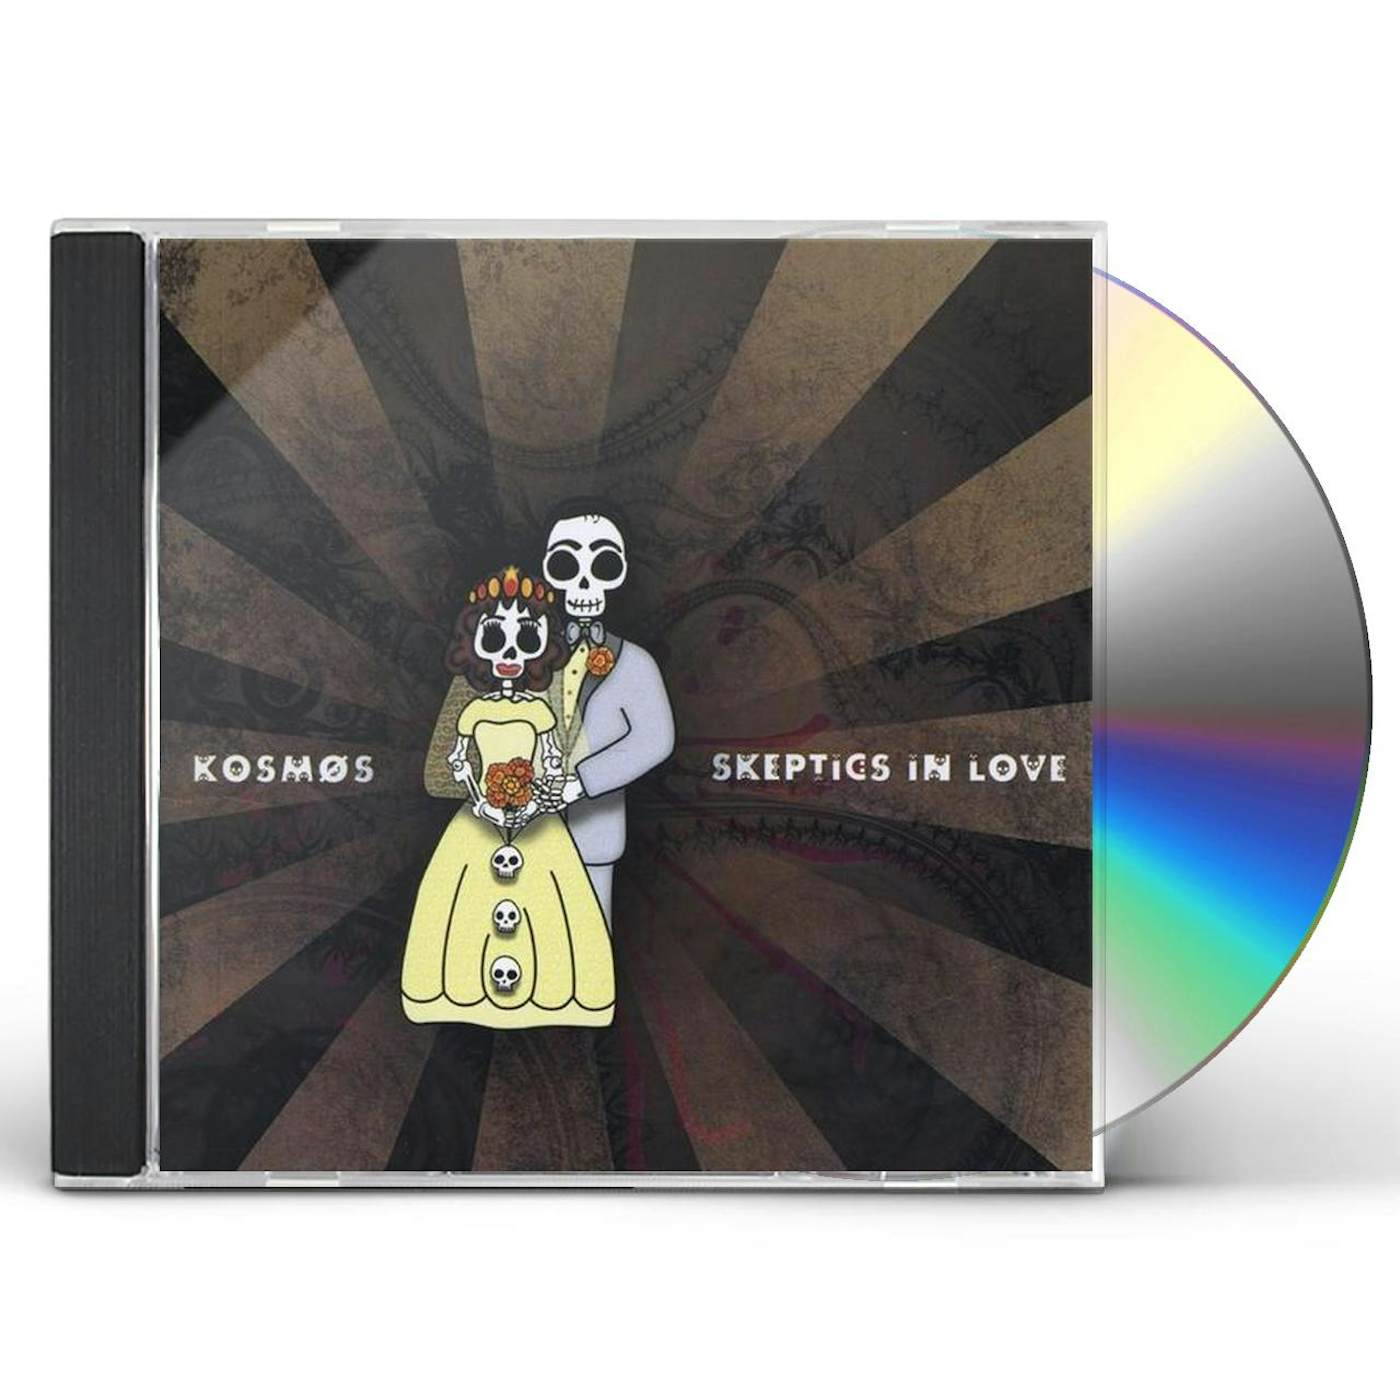 Kosmos SKEPTICS IN LOVE CD